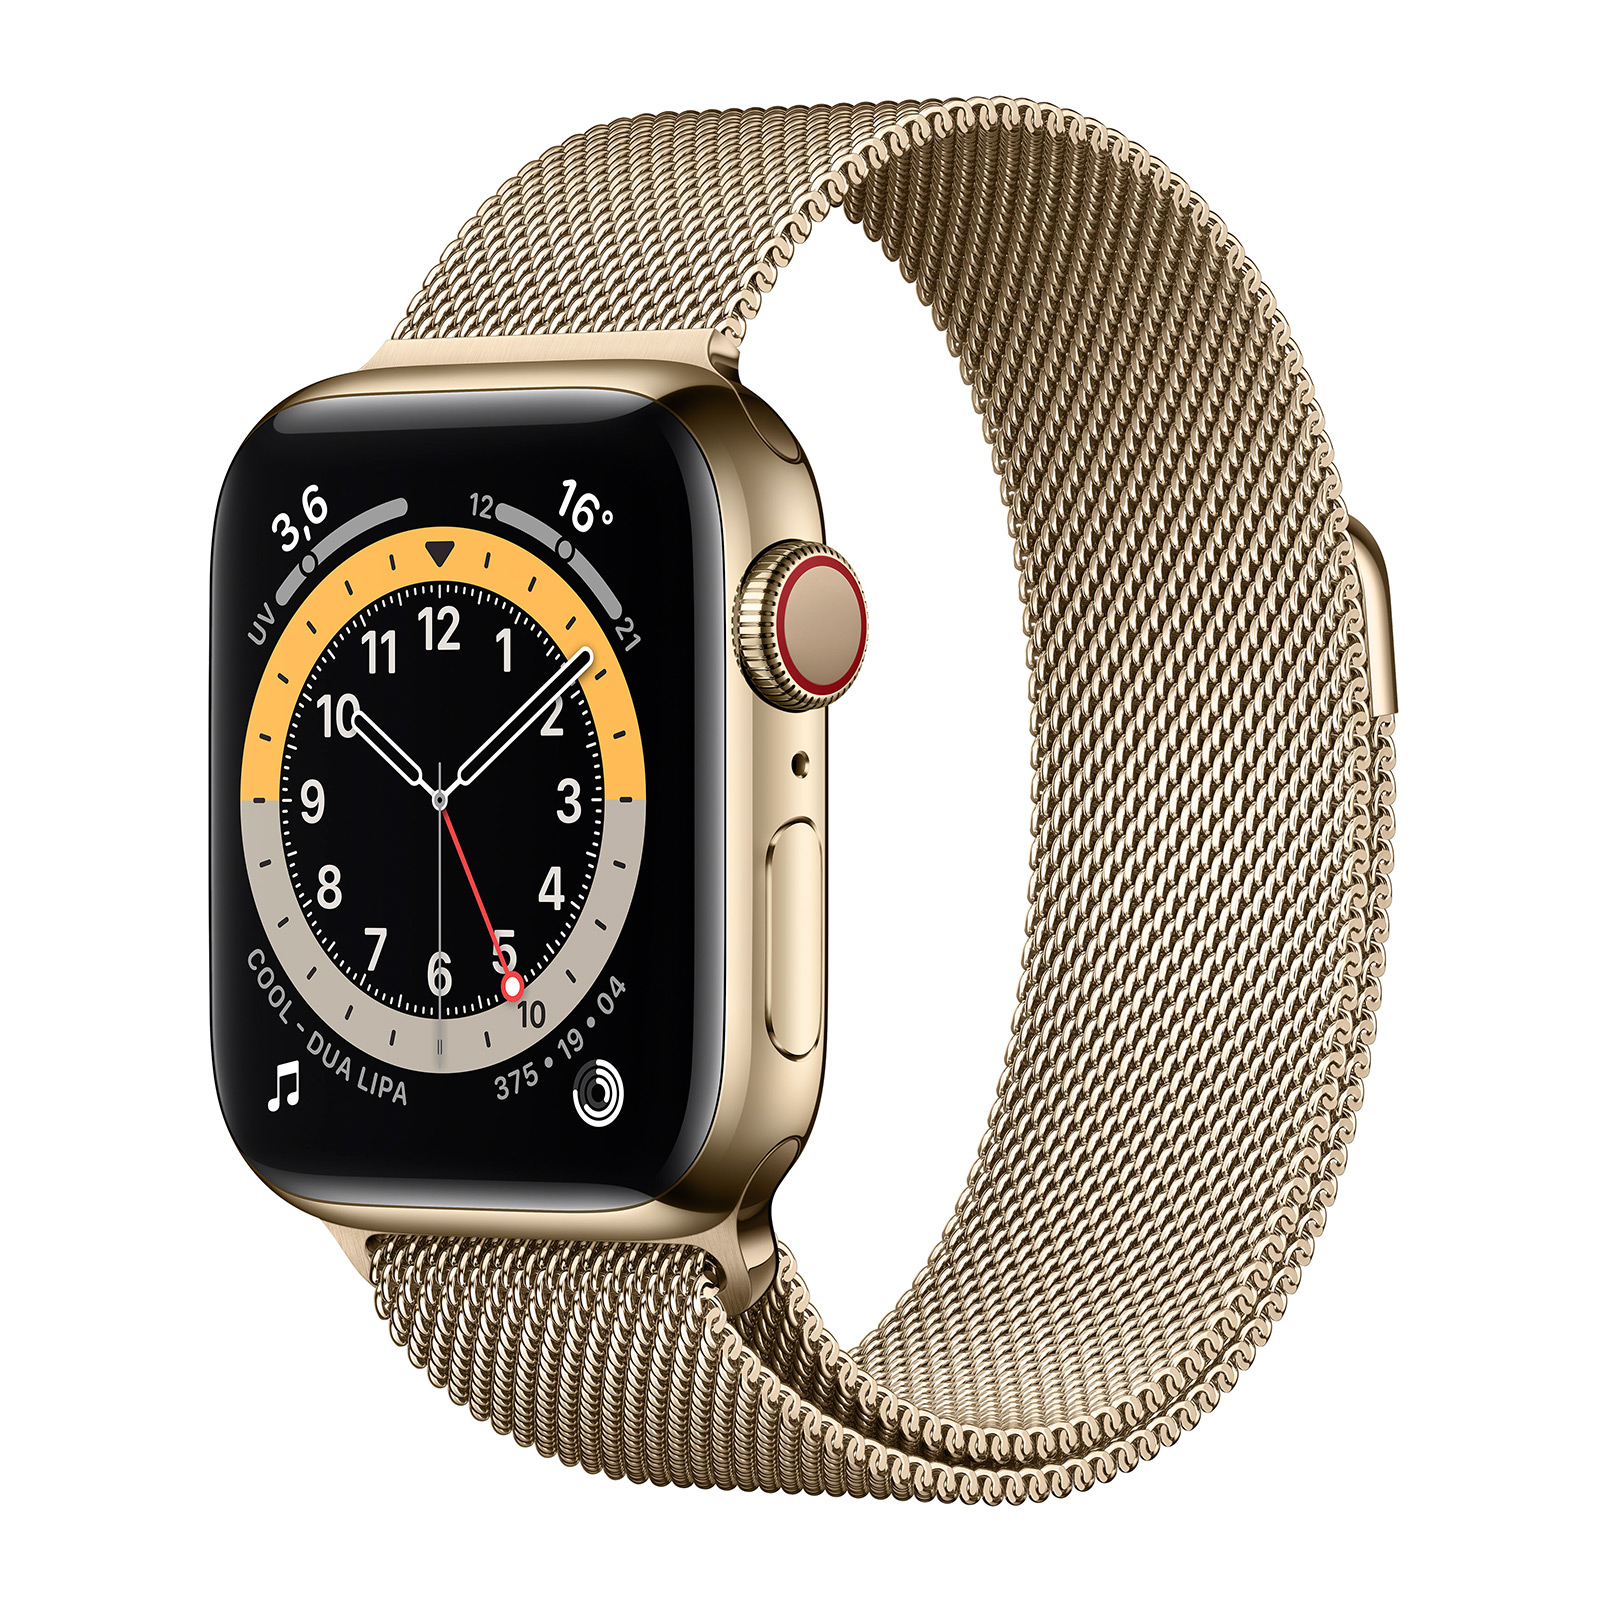 Apple Watch Series 6 GPS Cellular Stainless steel Gold Milanese Loop 40